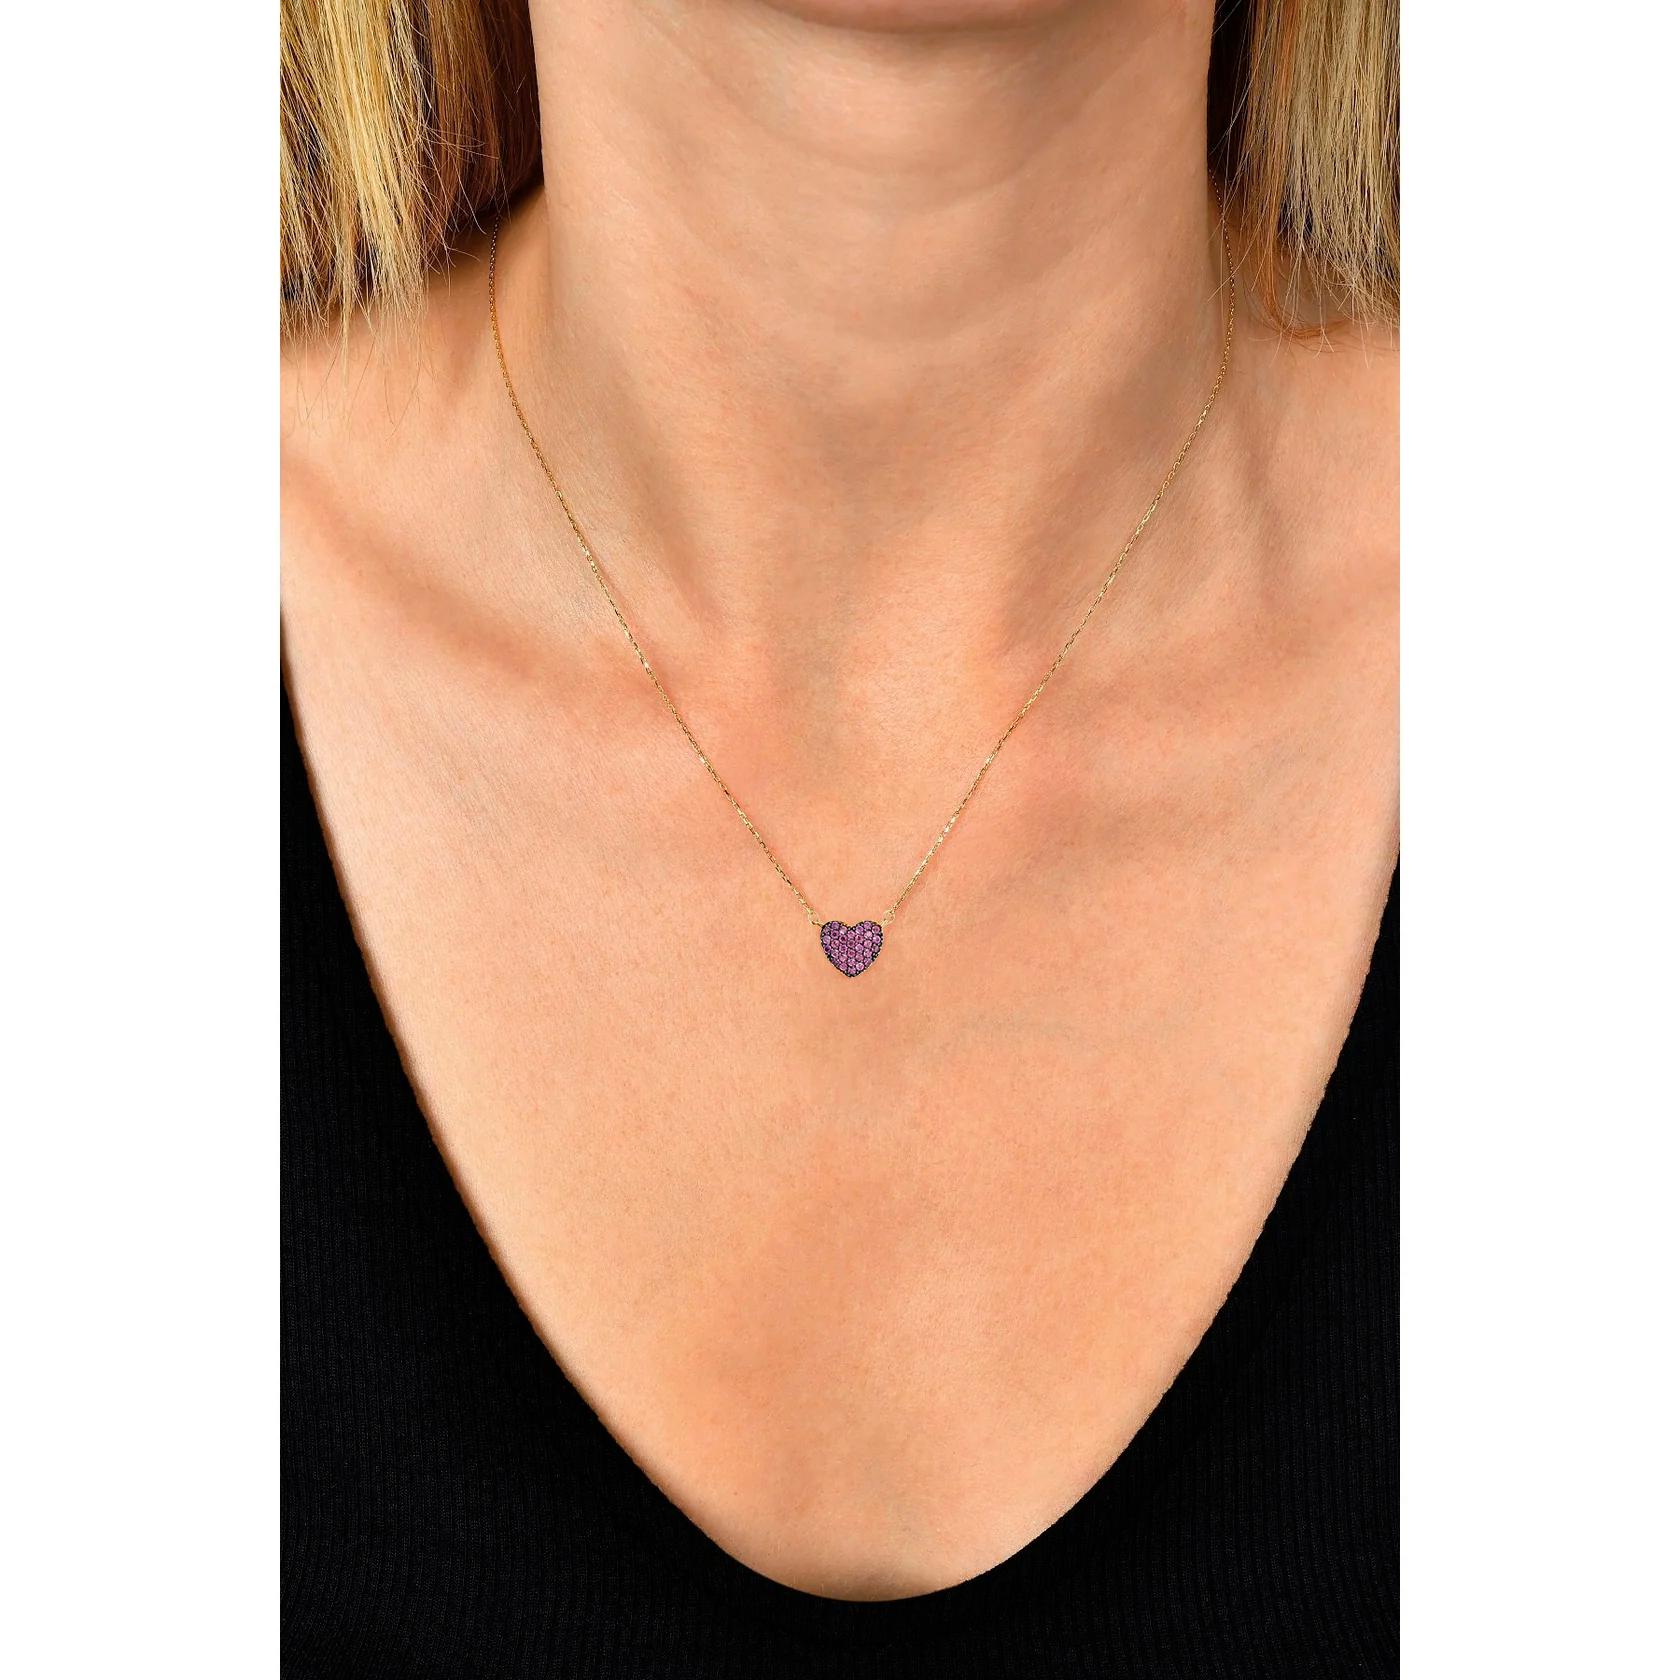 Heart shaped 14k gold pendant necklace.  3